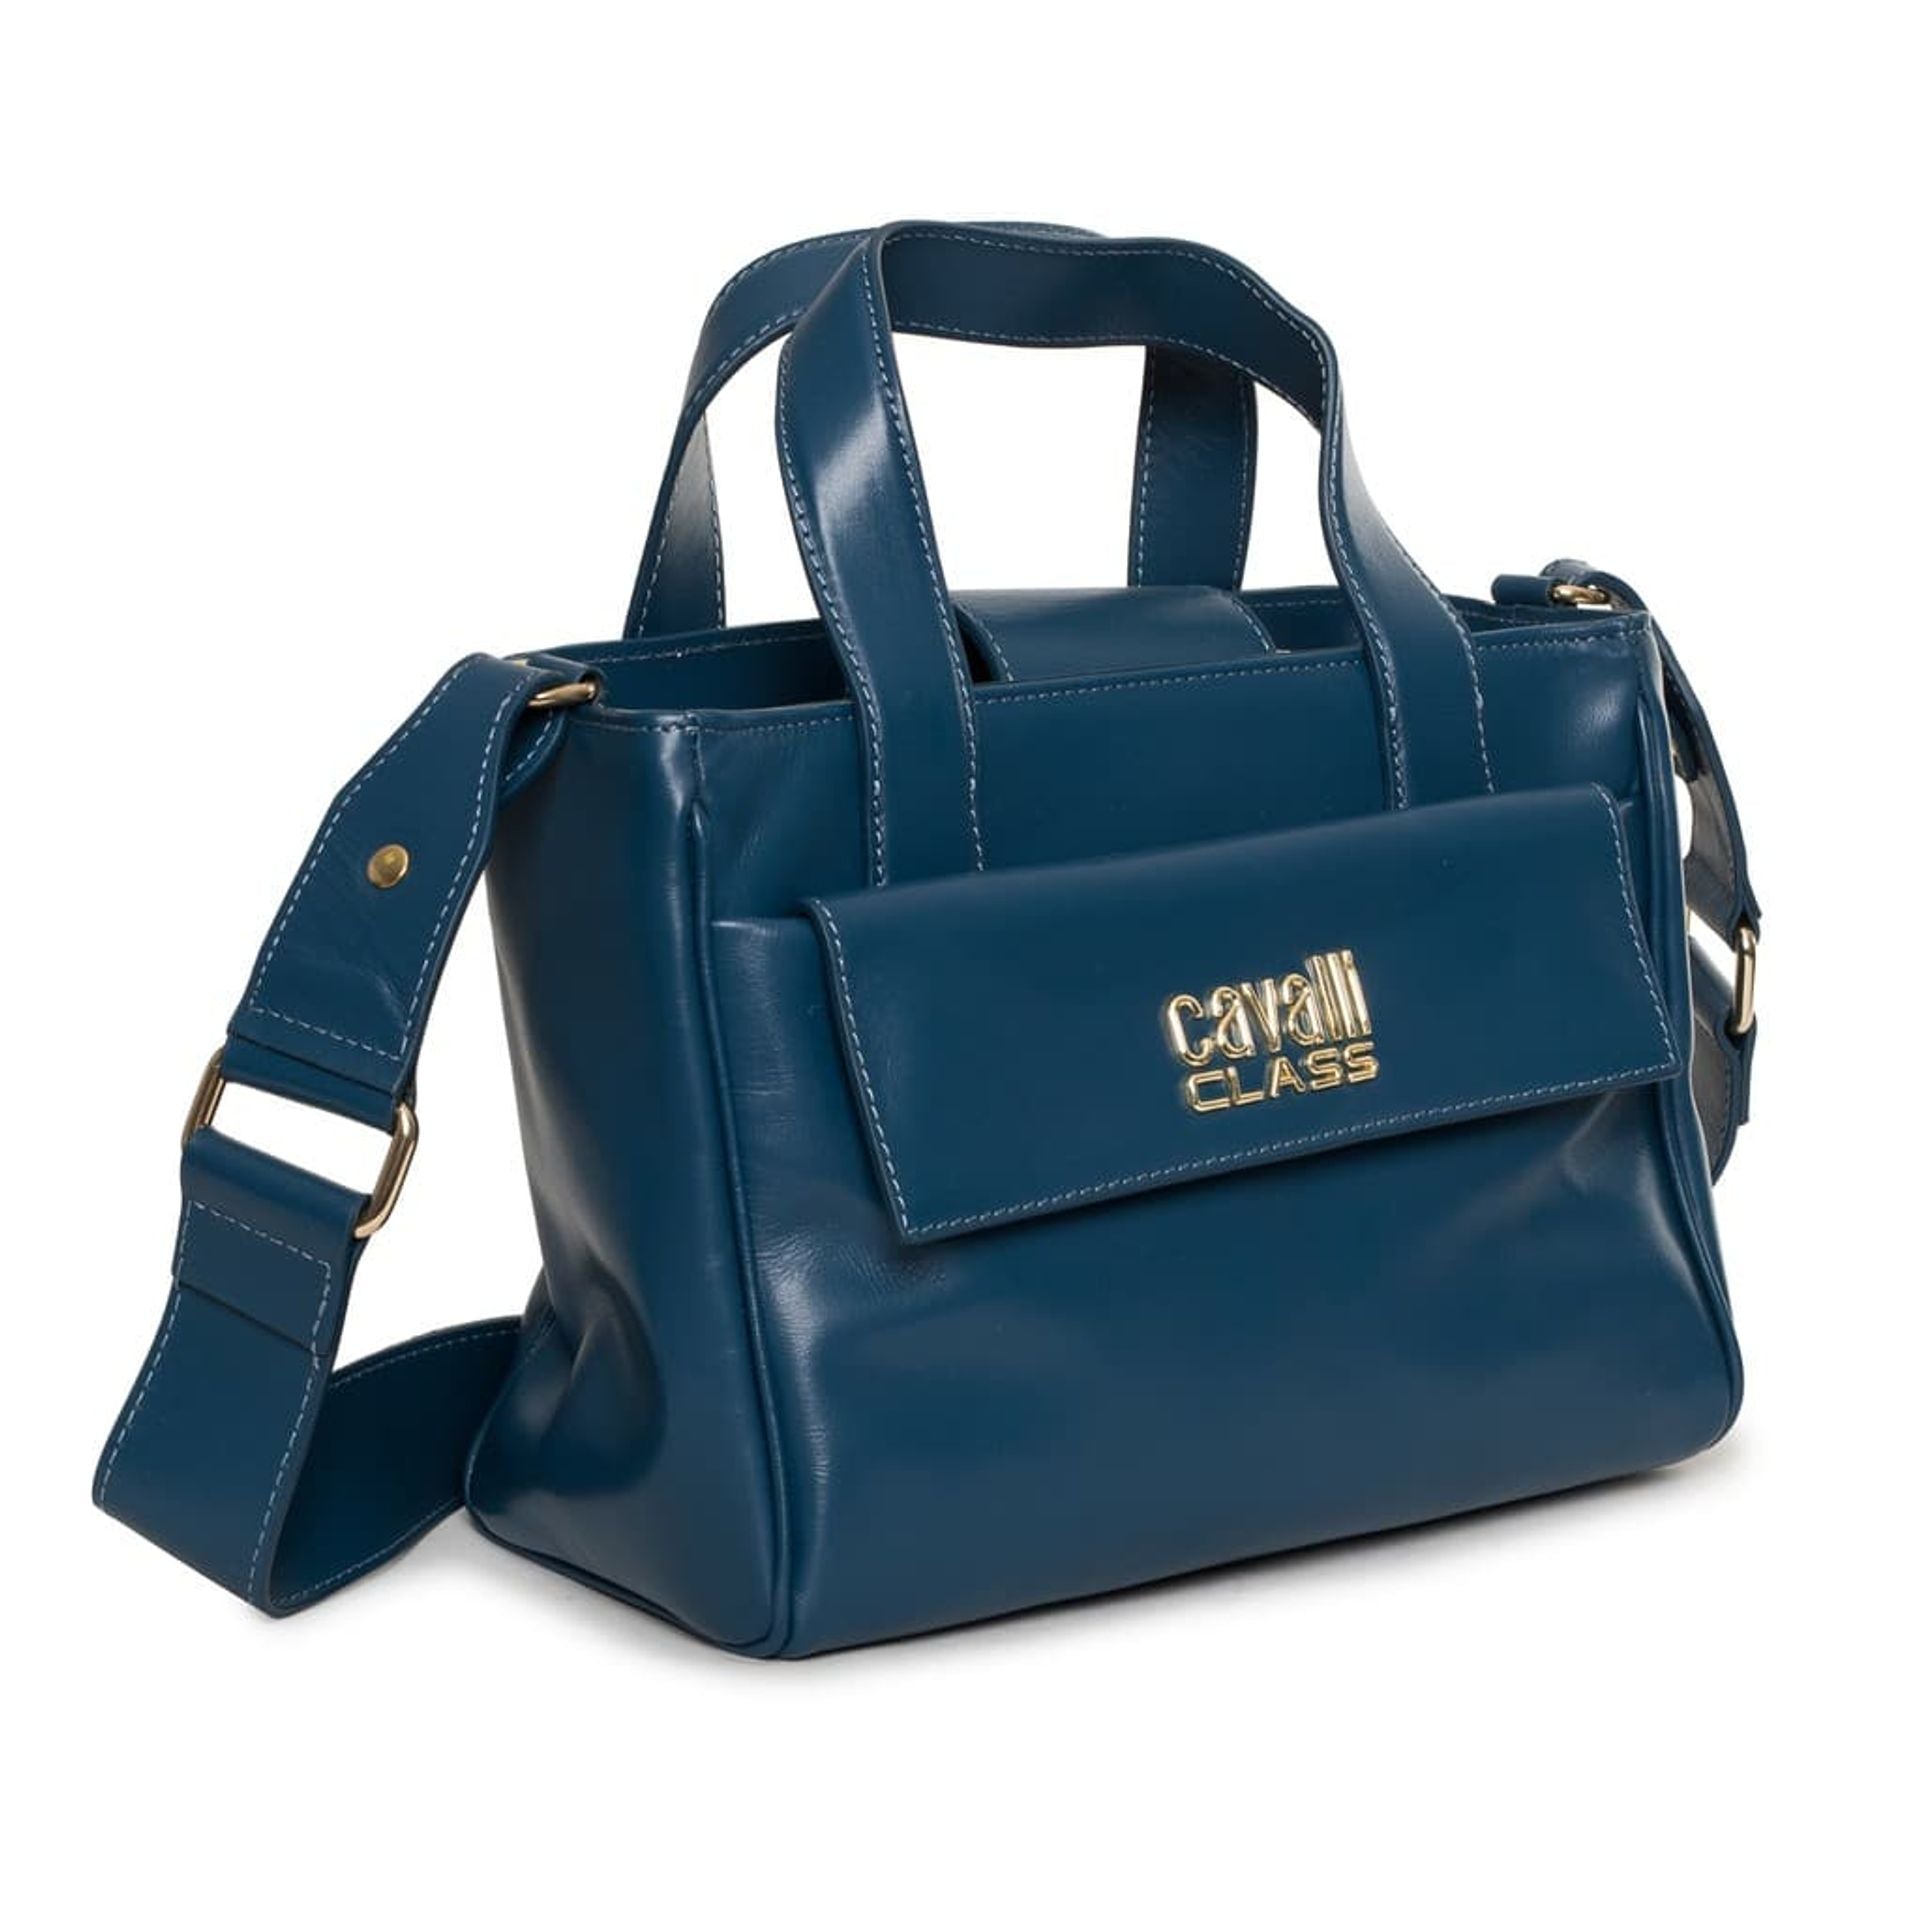 Cavalli Class Handbags